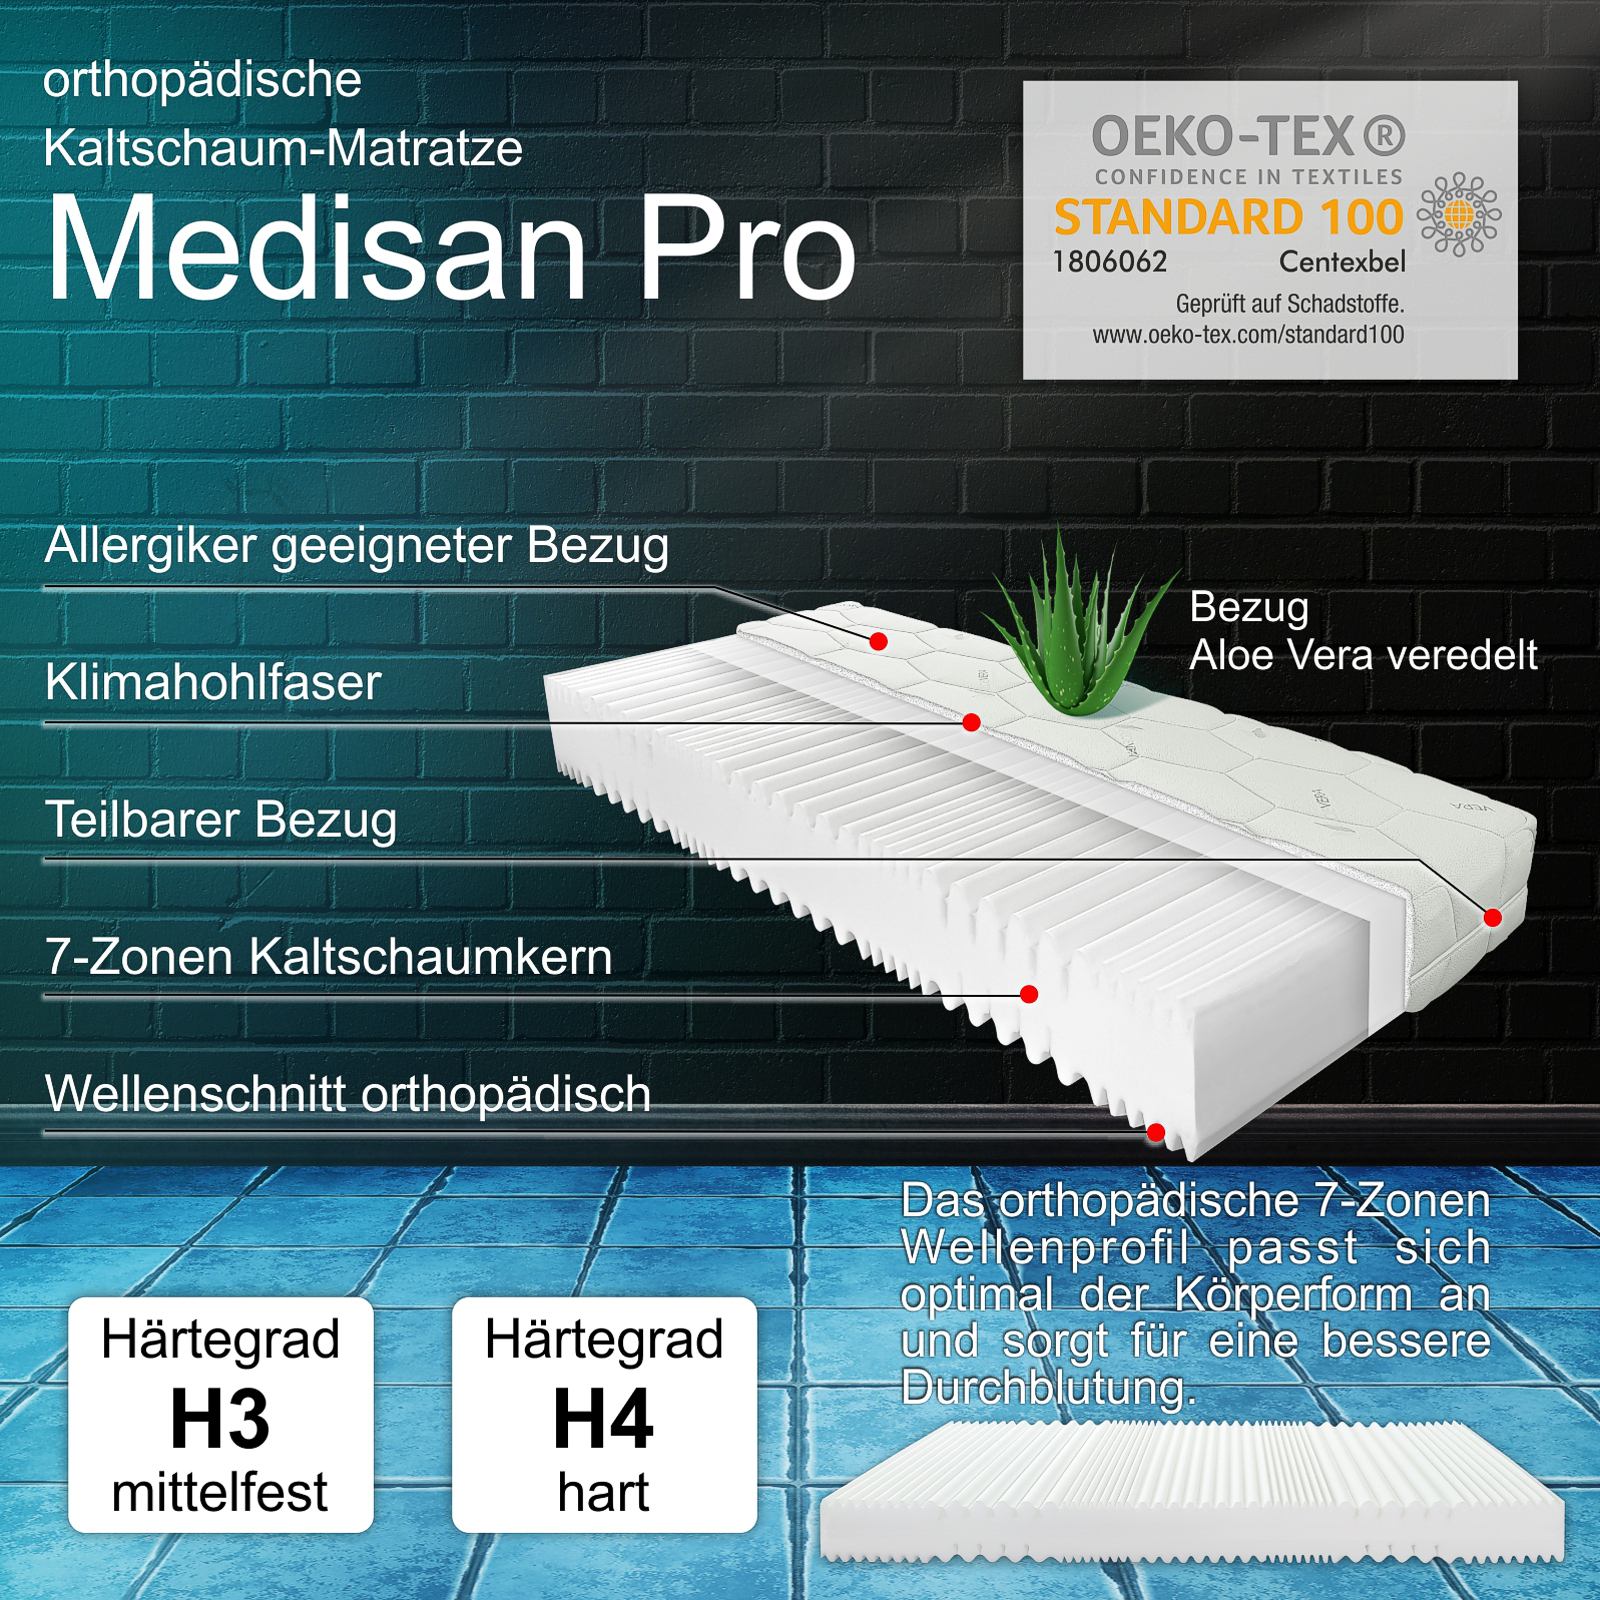 Kaltschaummatratze Medisan Pro, 160x200cm, Härtegrad H3, 7-Zonen Profil